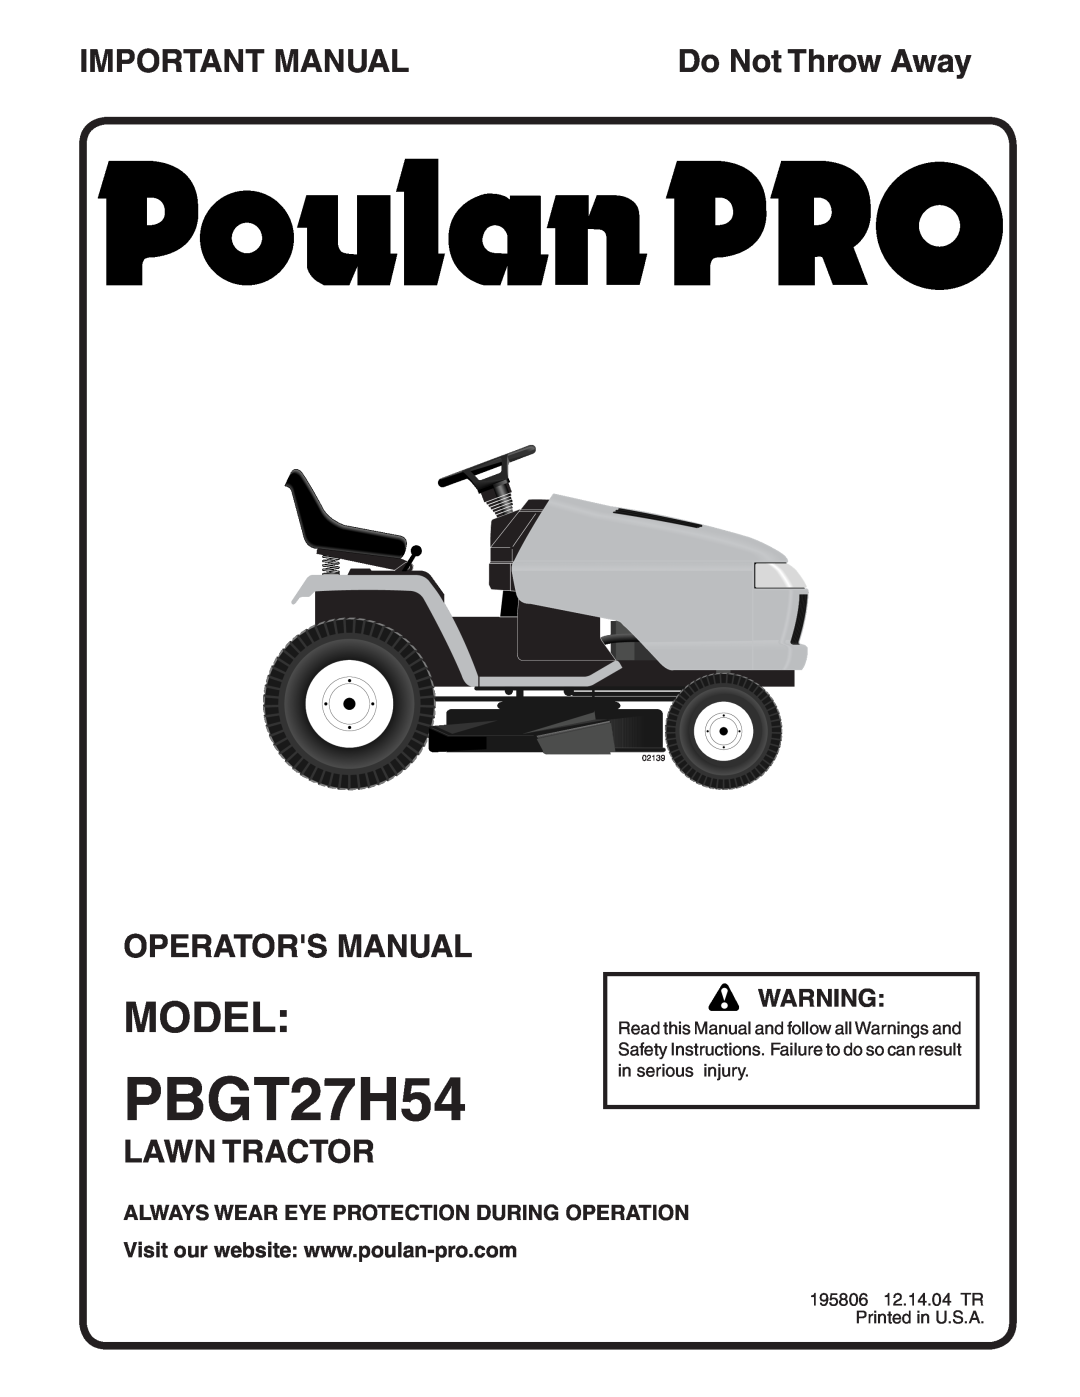 Poulan PBGT27H54 manual Model, Important Manual, Operators Manual, Lawn Tractor, Do Not Throw Away, 02139 